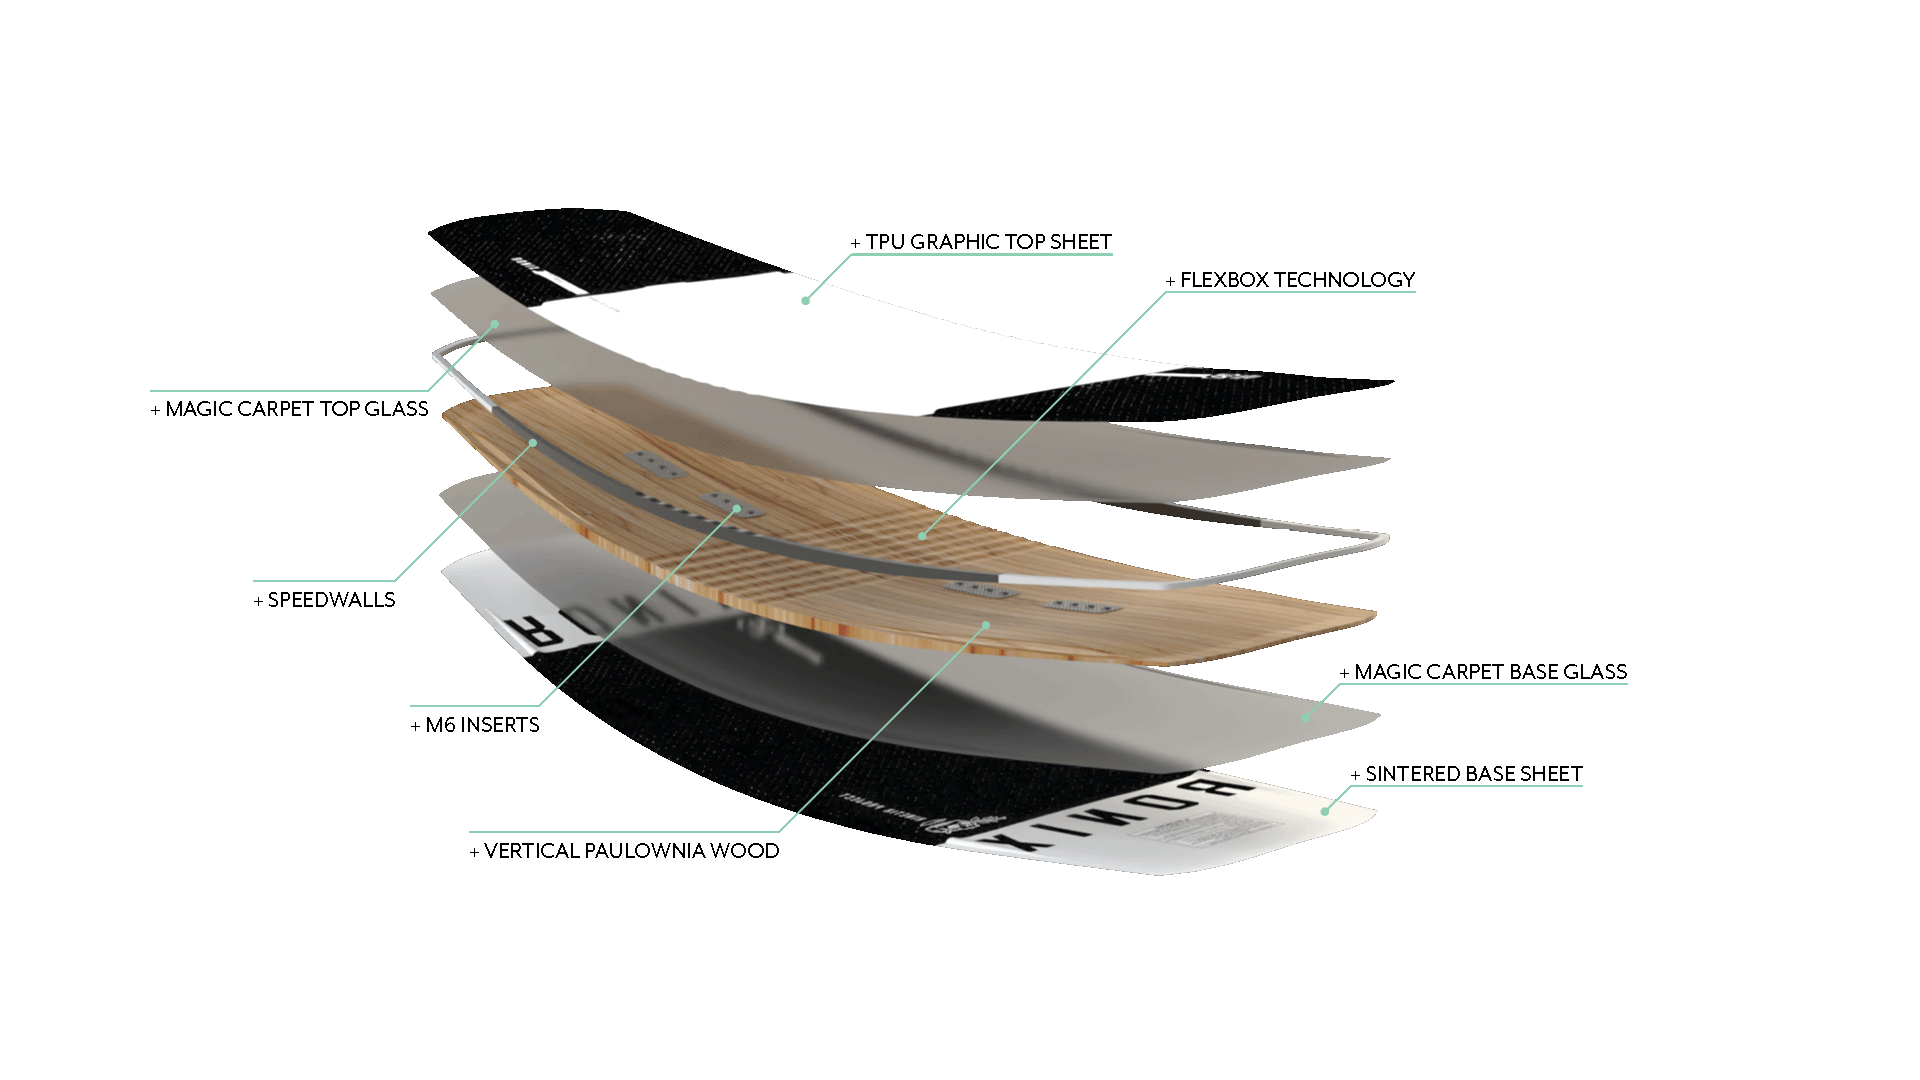 flexbox-kinetik-project-wakeboard-ronix-construction